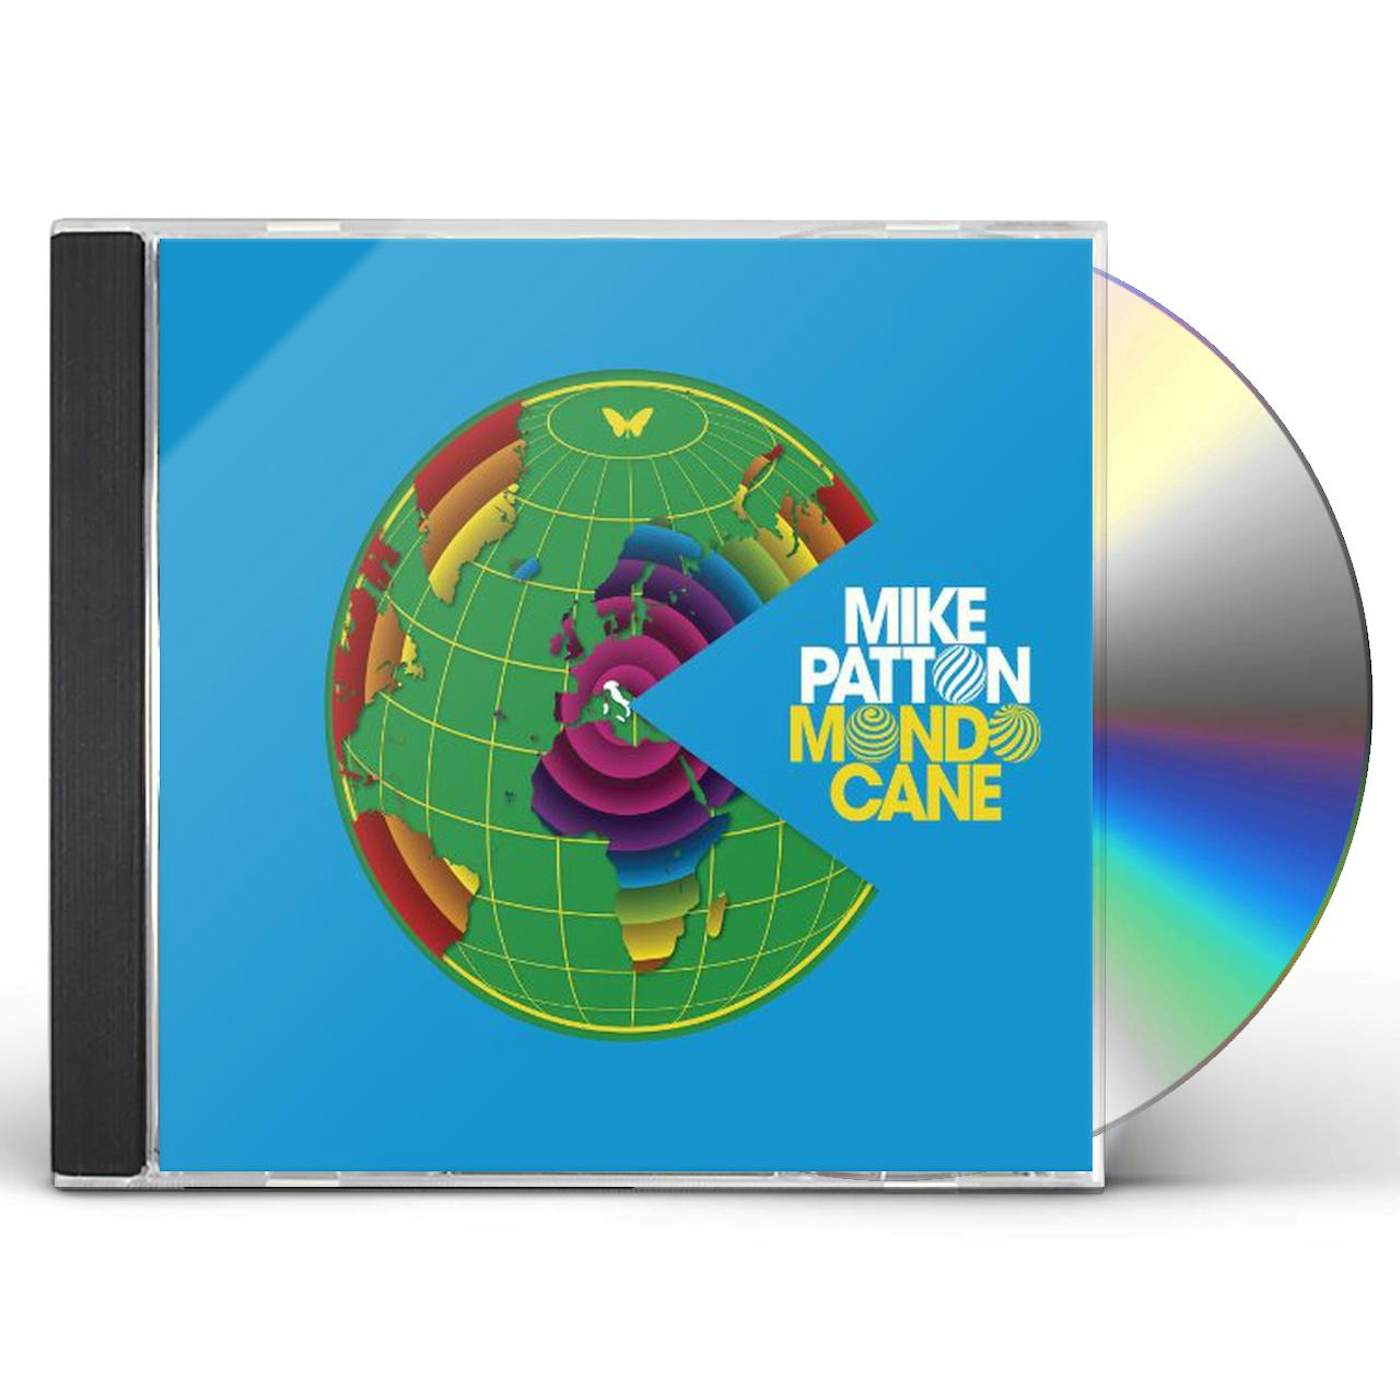 Mike Patton MONDO CANE CD